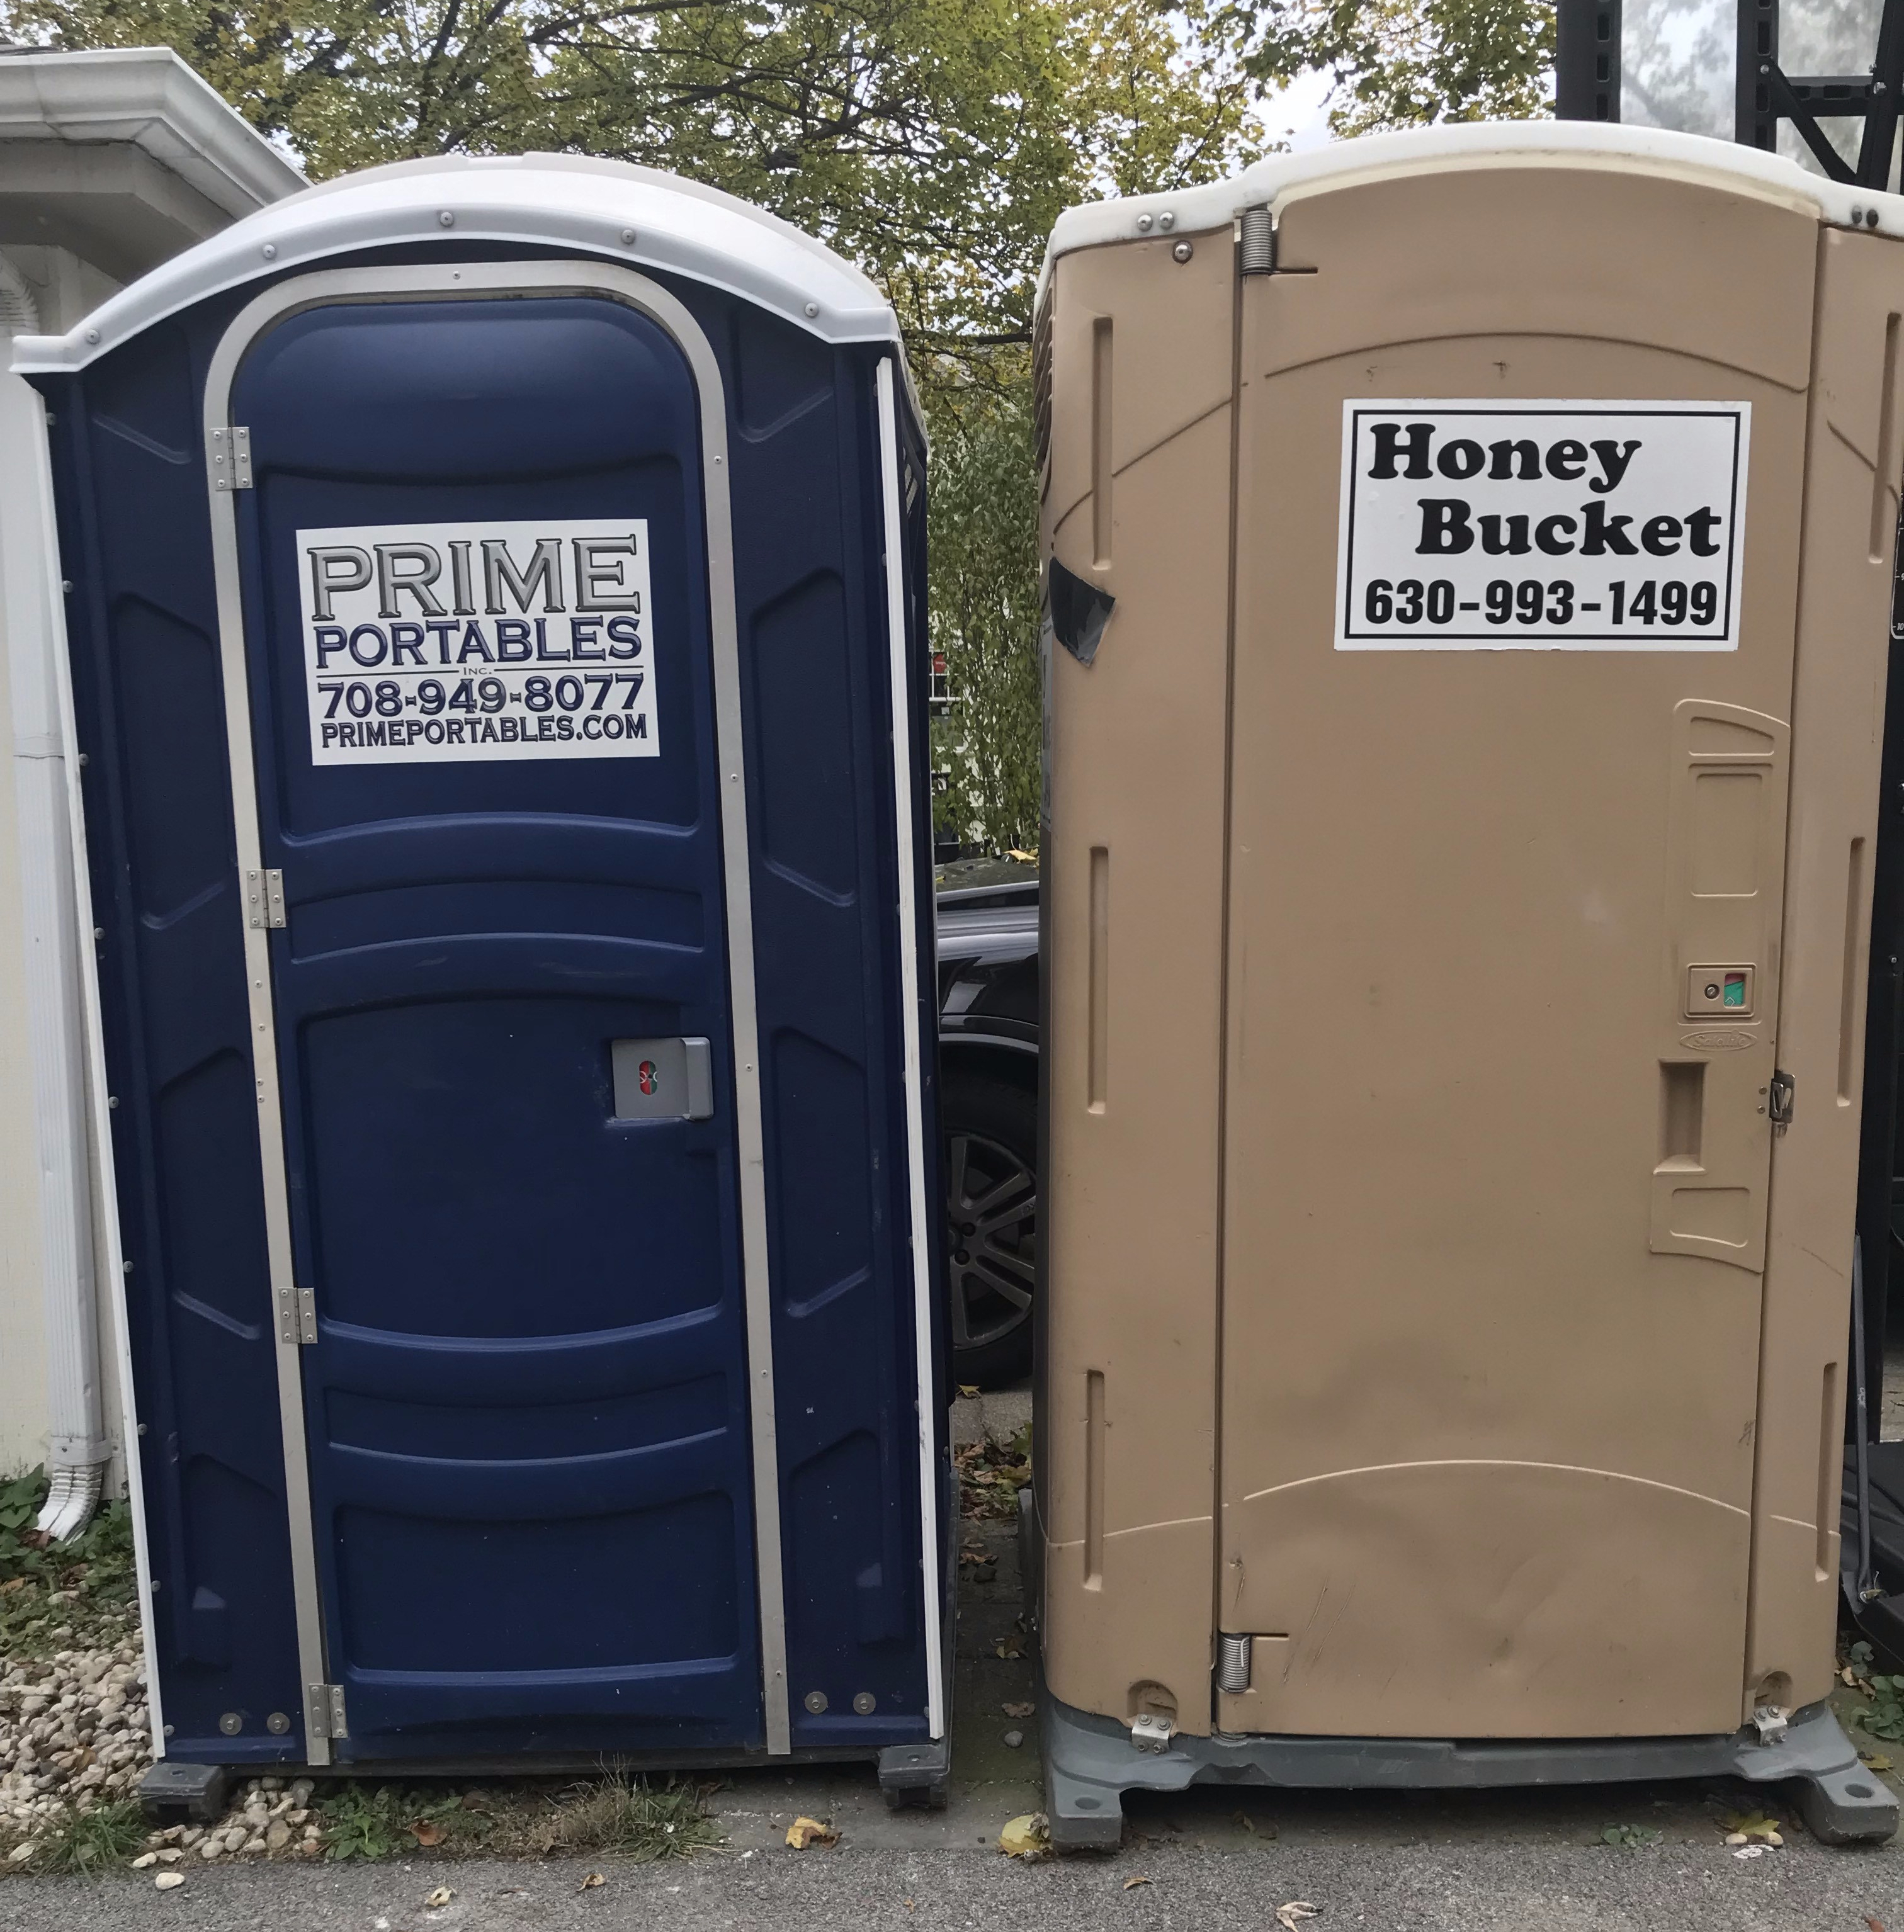 Two Porta-potties?